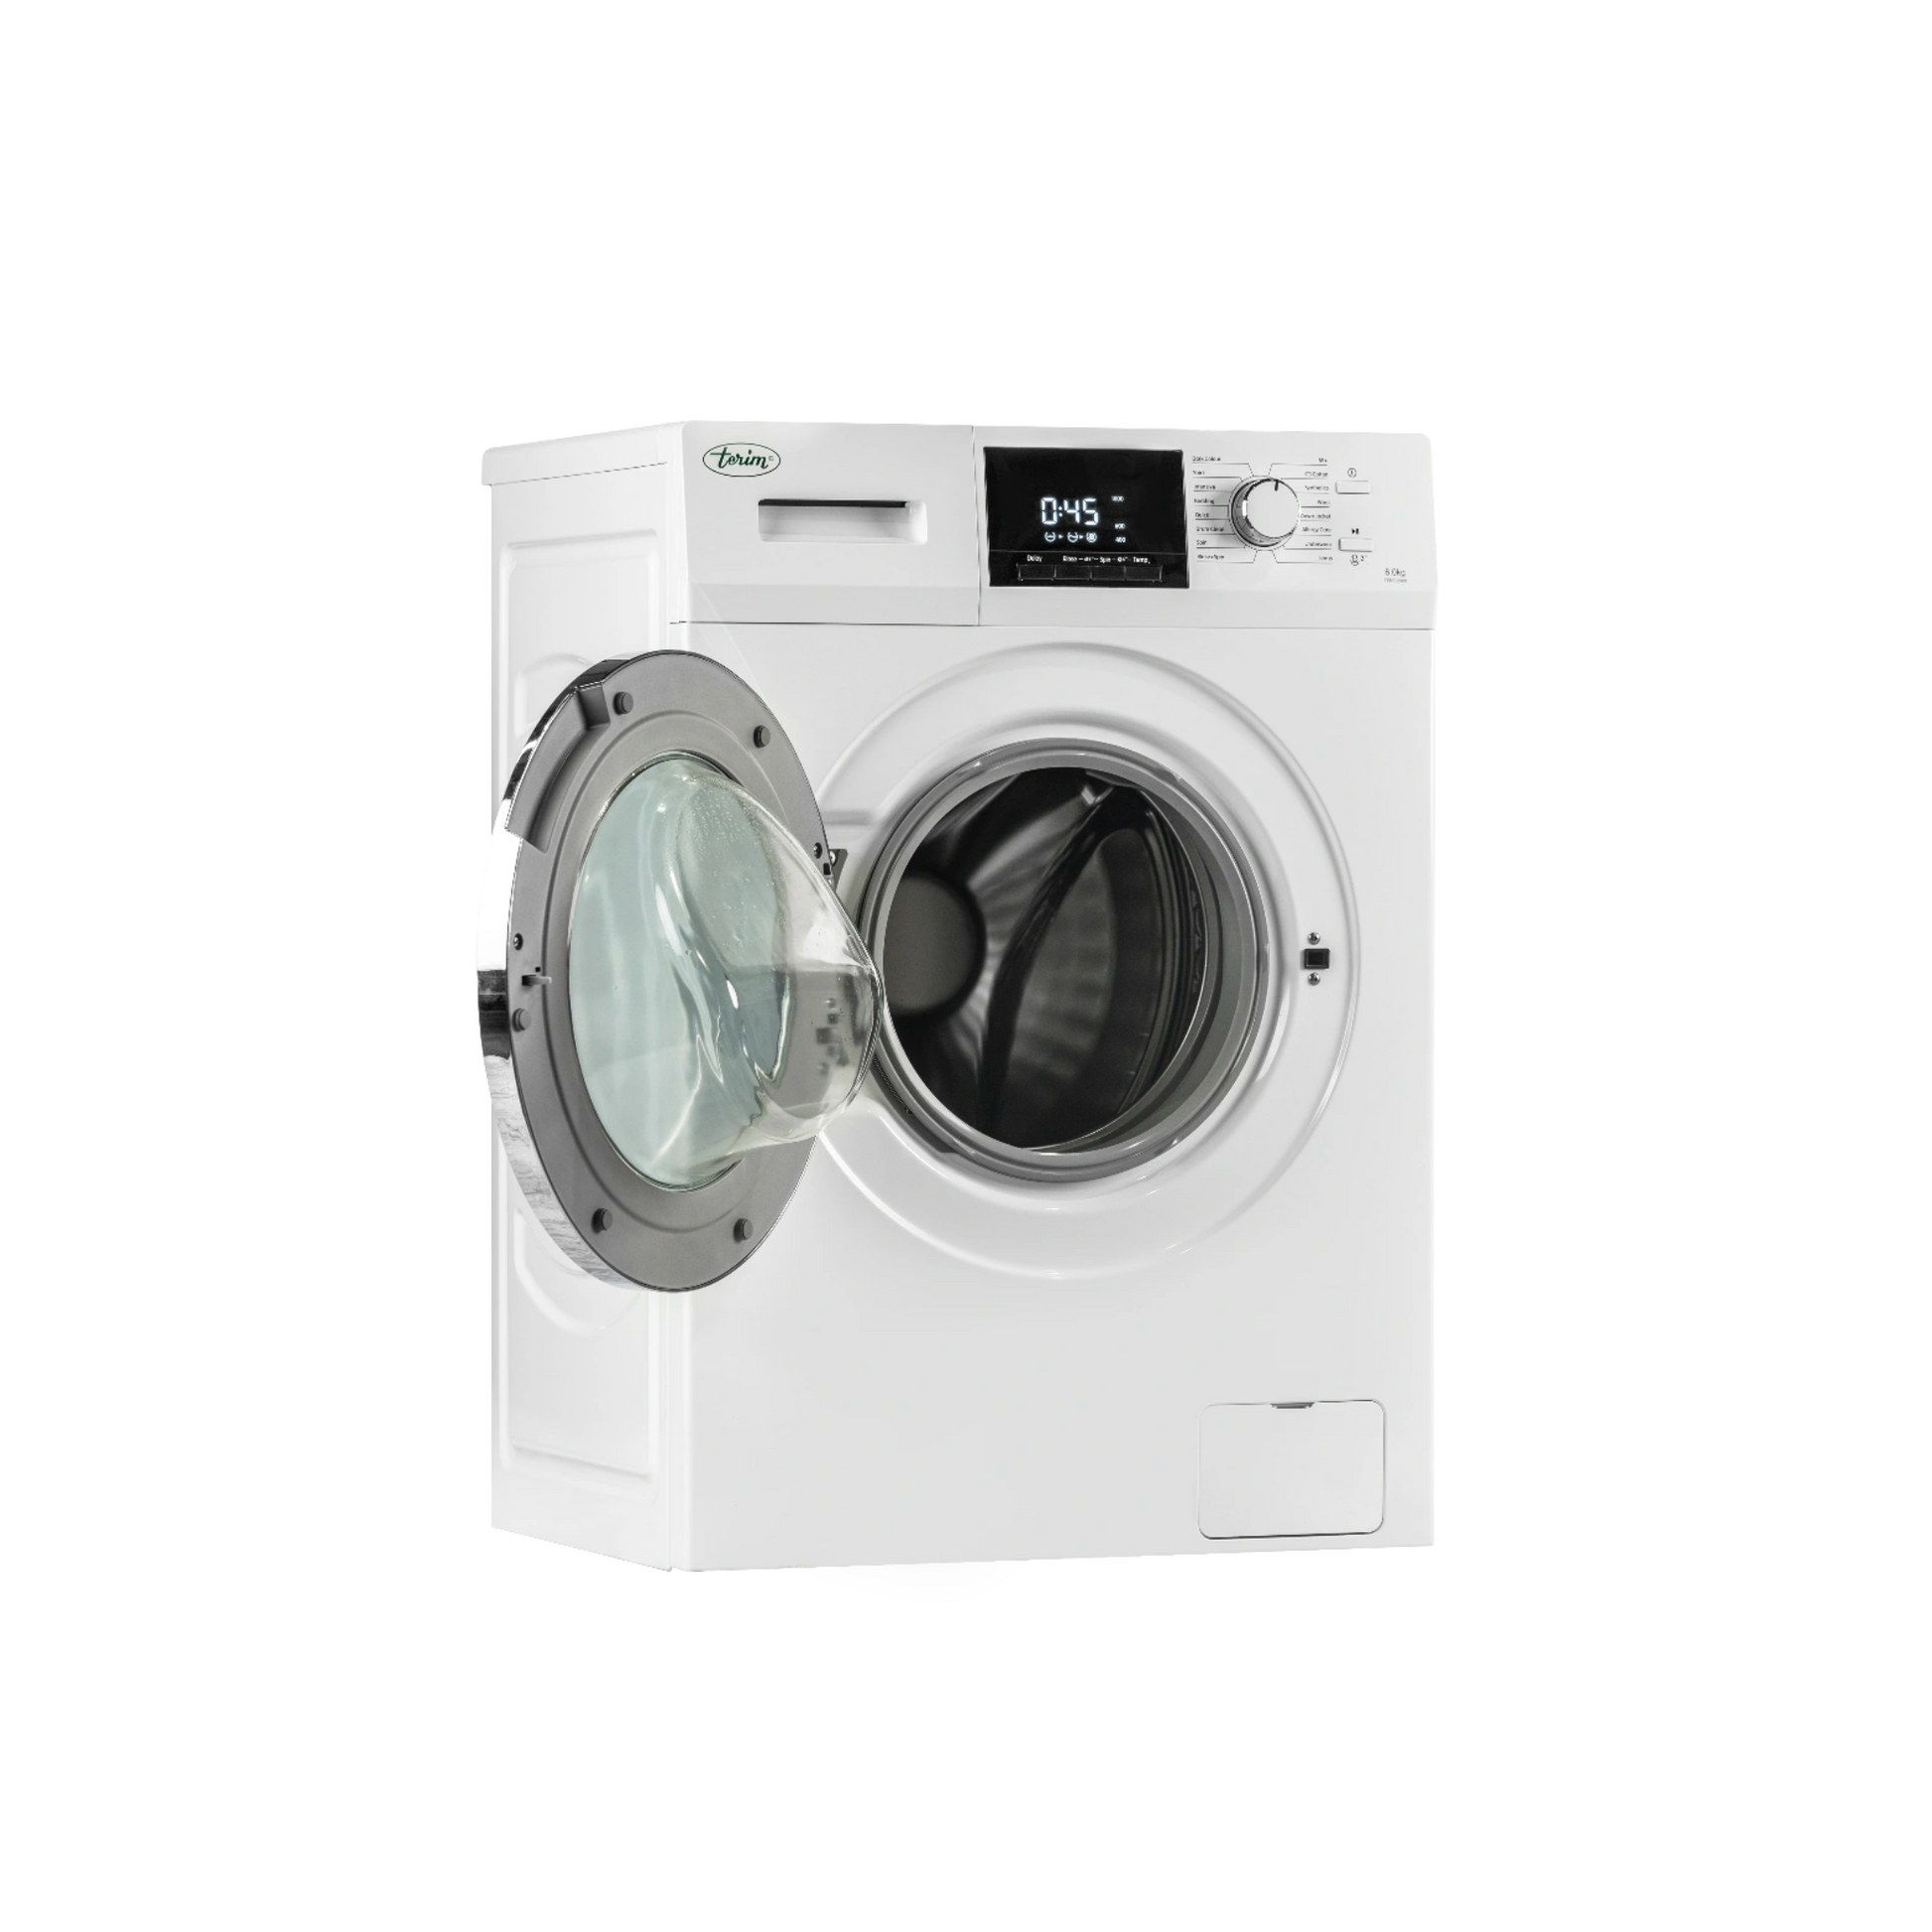 Terim 6KG Fully Automatic Washing Machine, TERFL6900